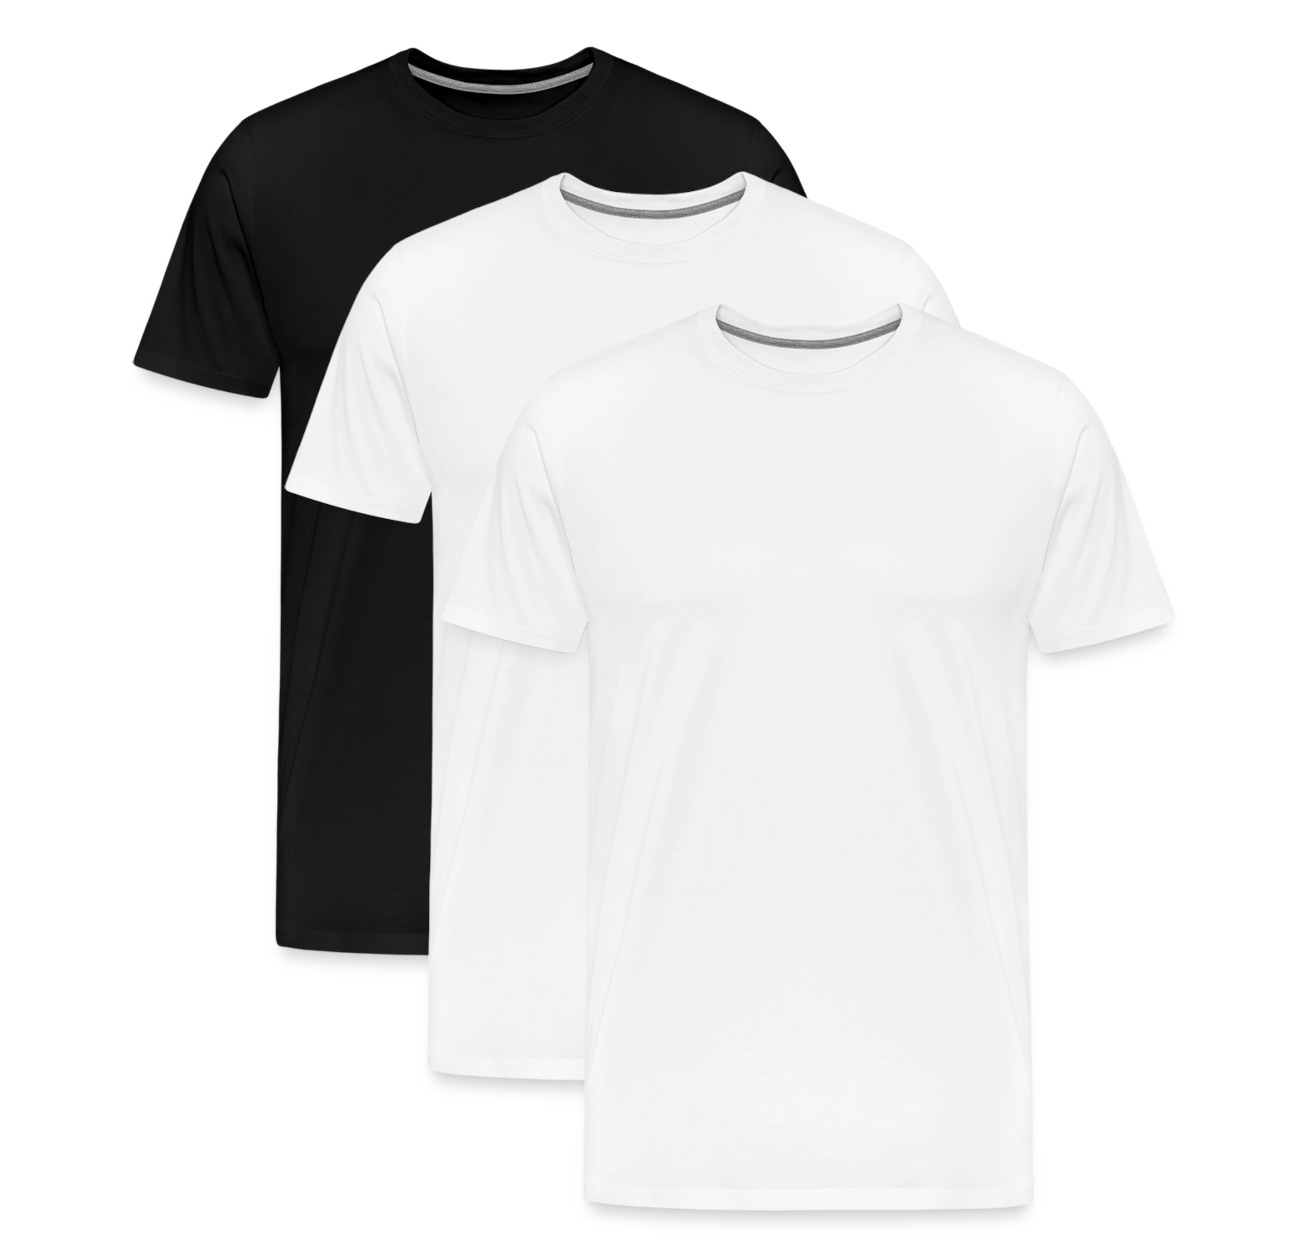 Fluent Tee Variety 3-Pack (Size 5XL) - Men's Premium T-Shirt from fluentclothing.com